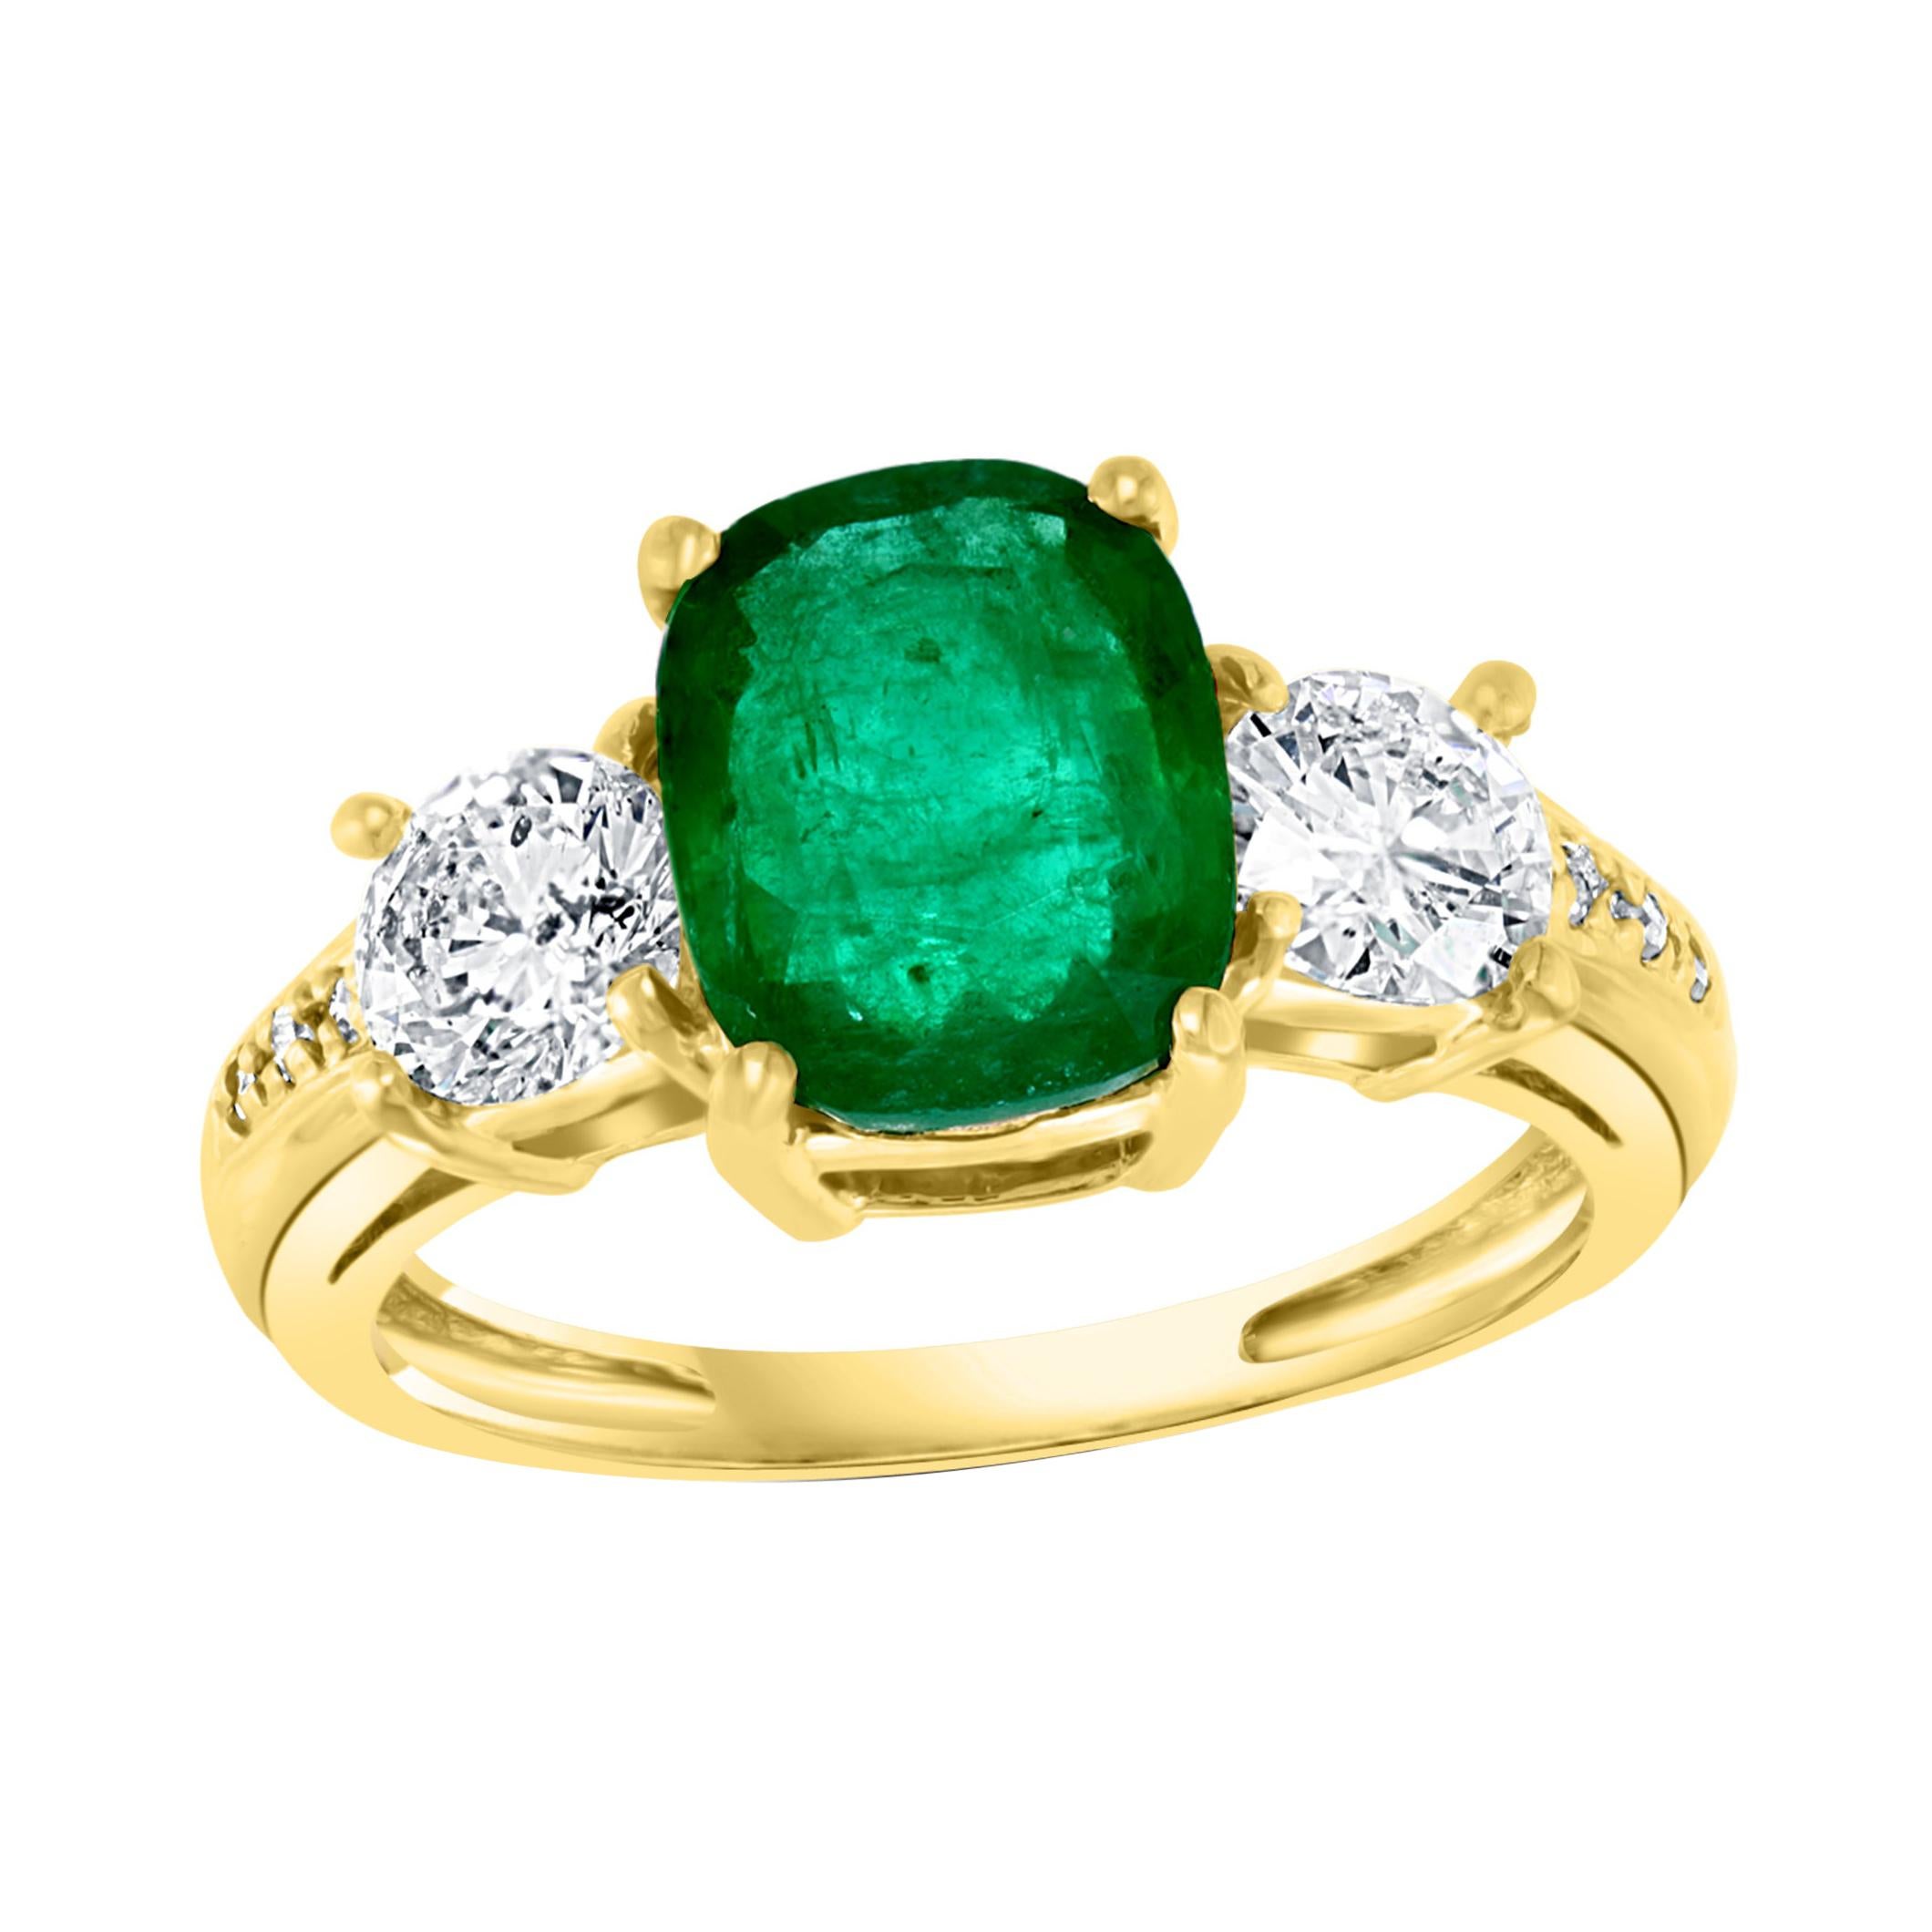 3 Carat Natural Cushion Cut Emerald & 2 Solitaire Diamond Ring 14 Kt Yellow Gold